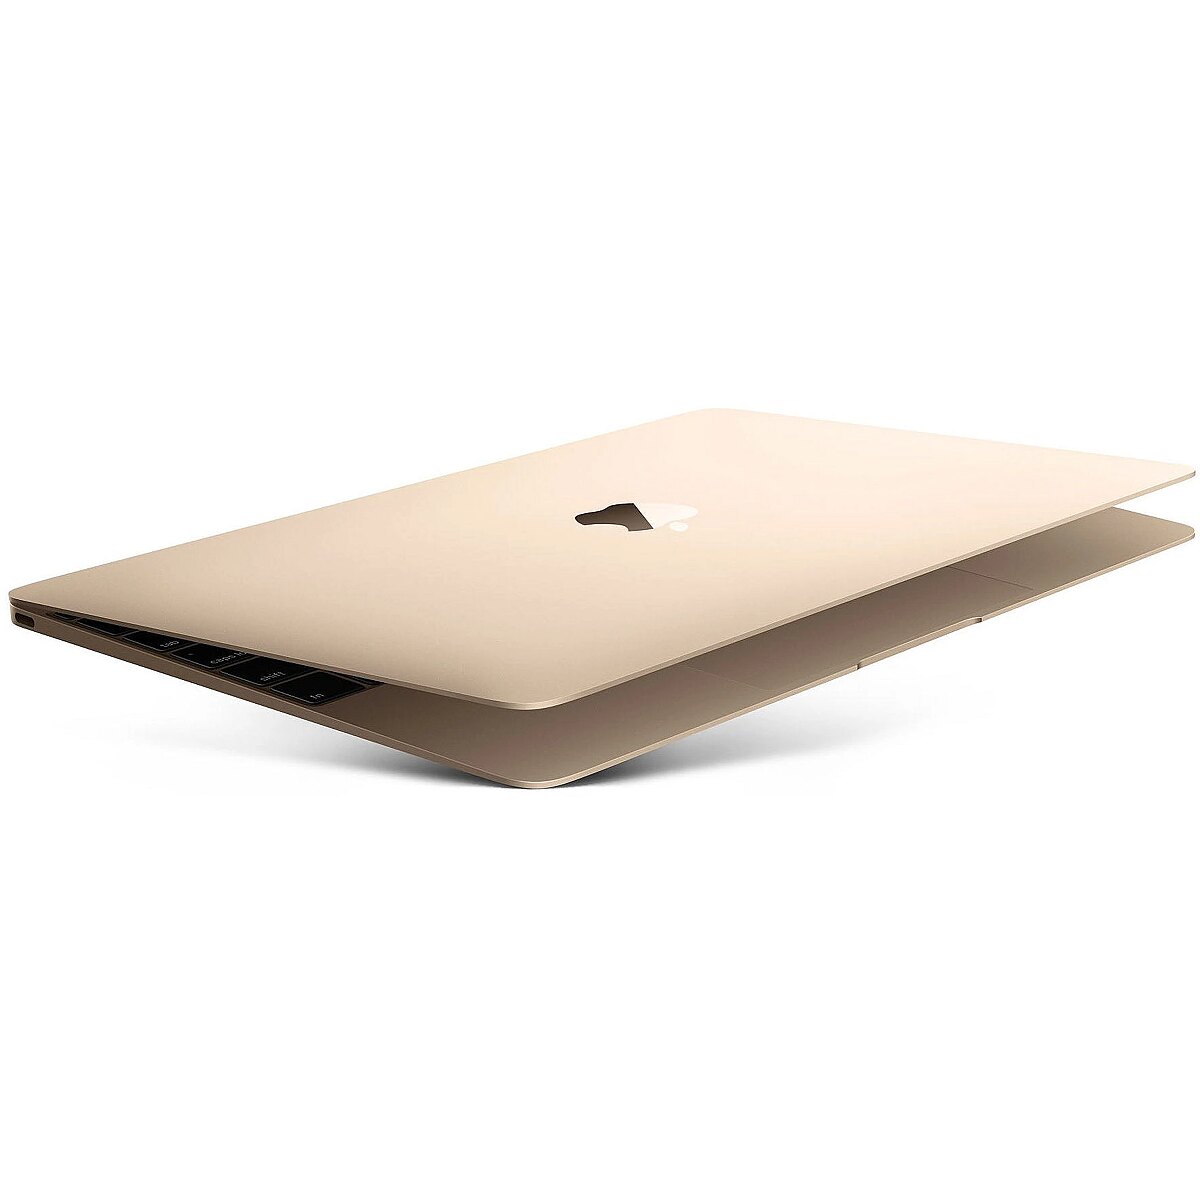 Apple MacBook (2016) Gold, 12" Retina, Core m3-6Y30 1.1GHz, 8GB, 256GB